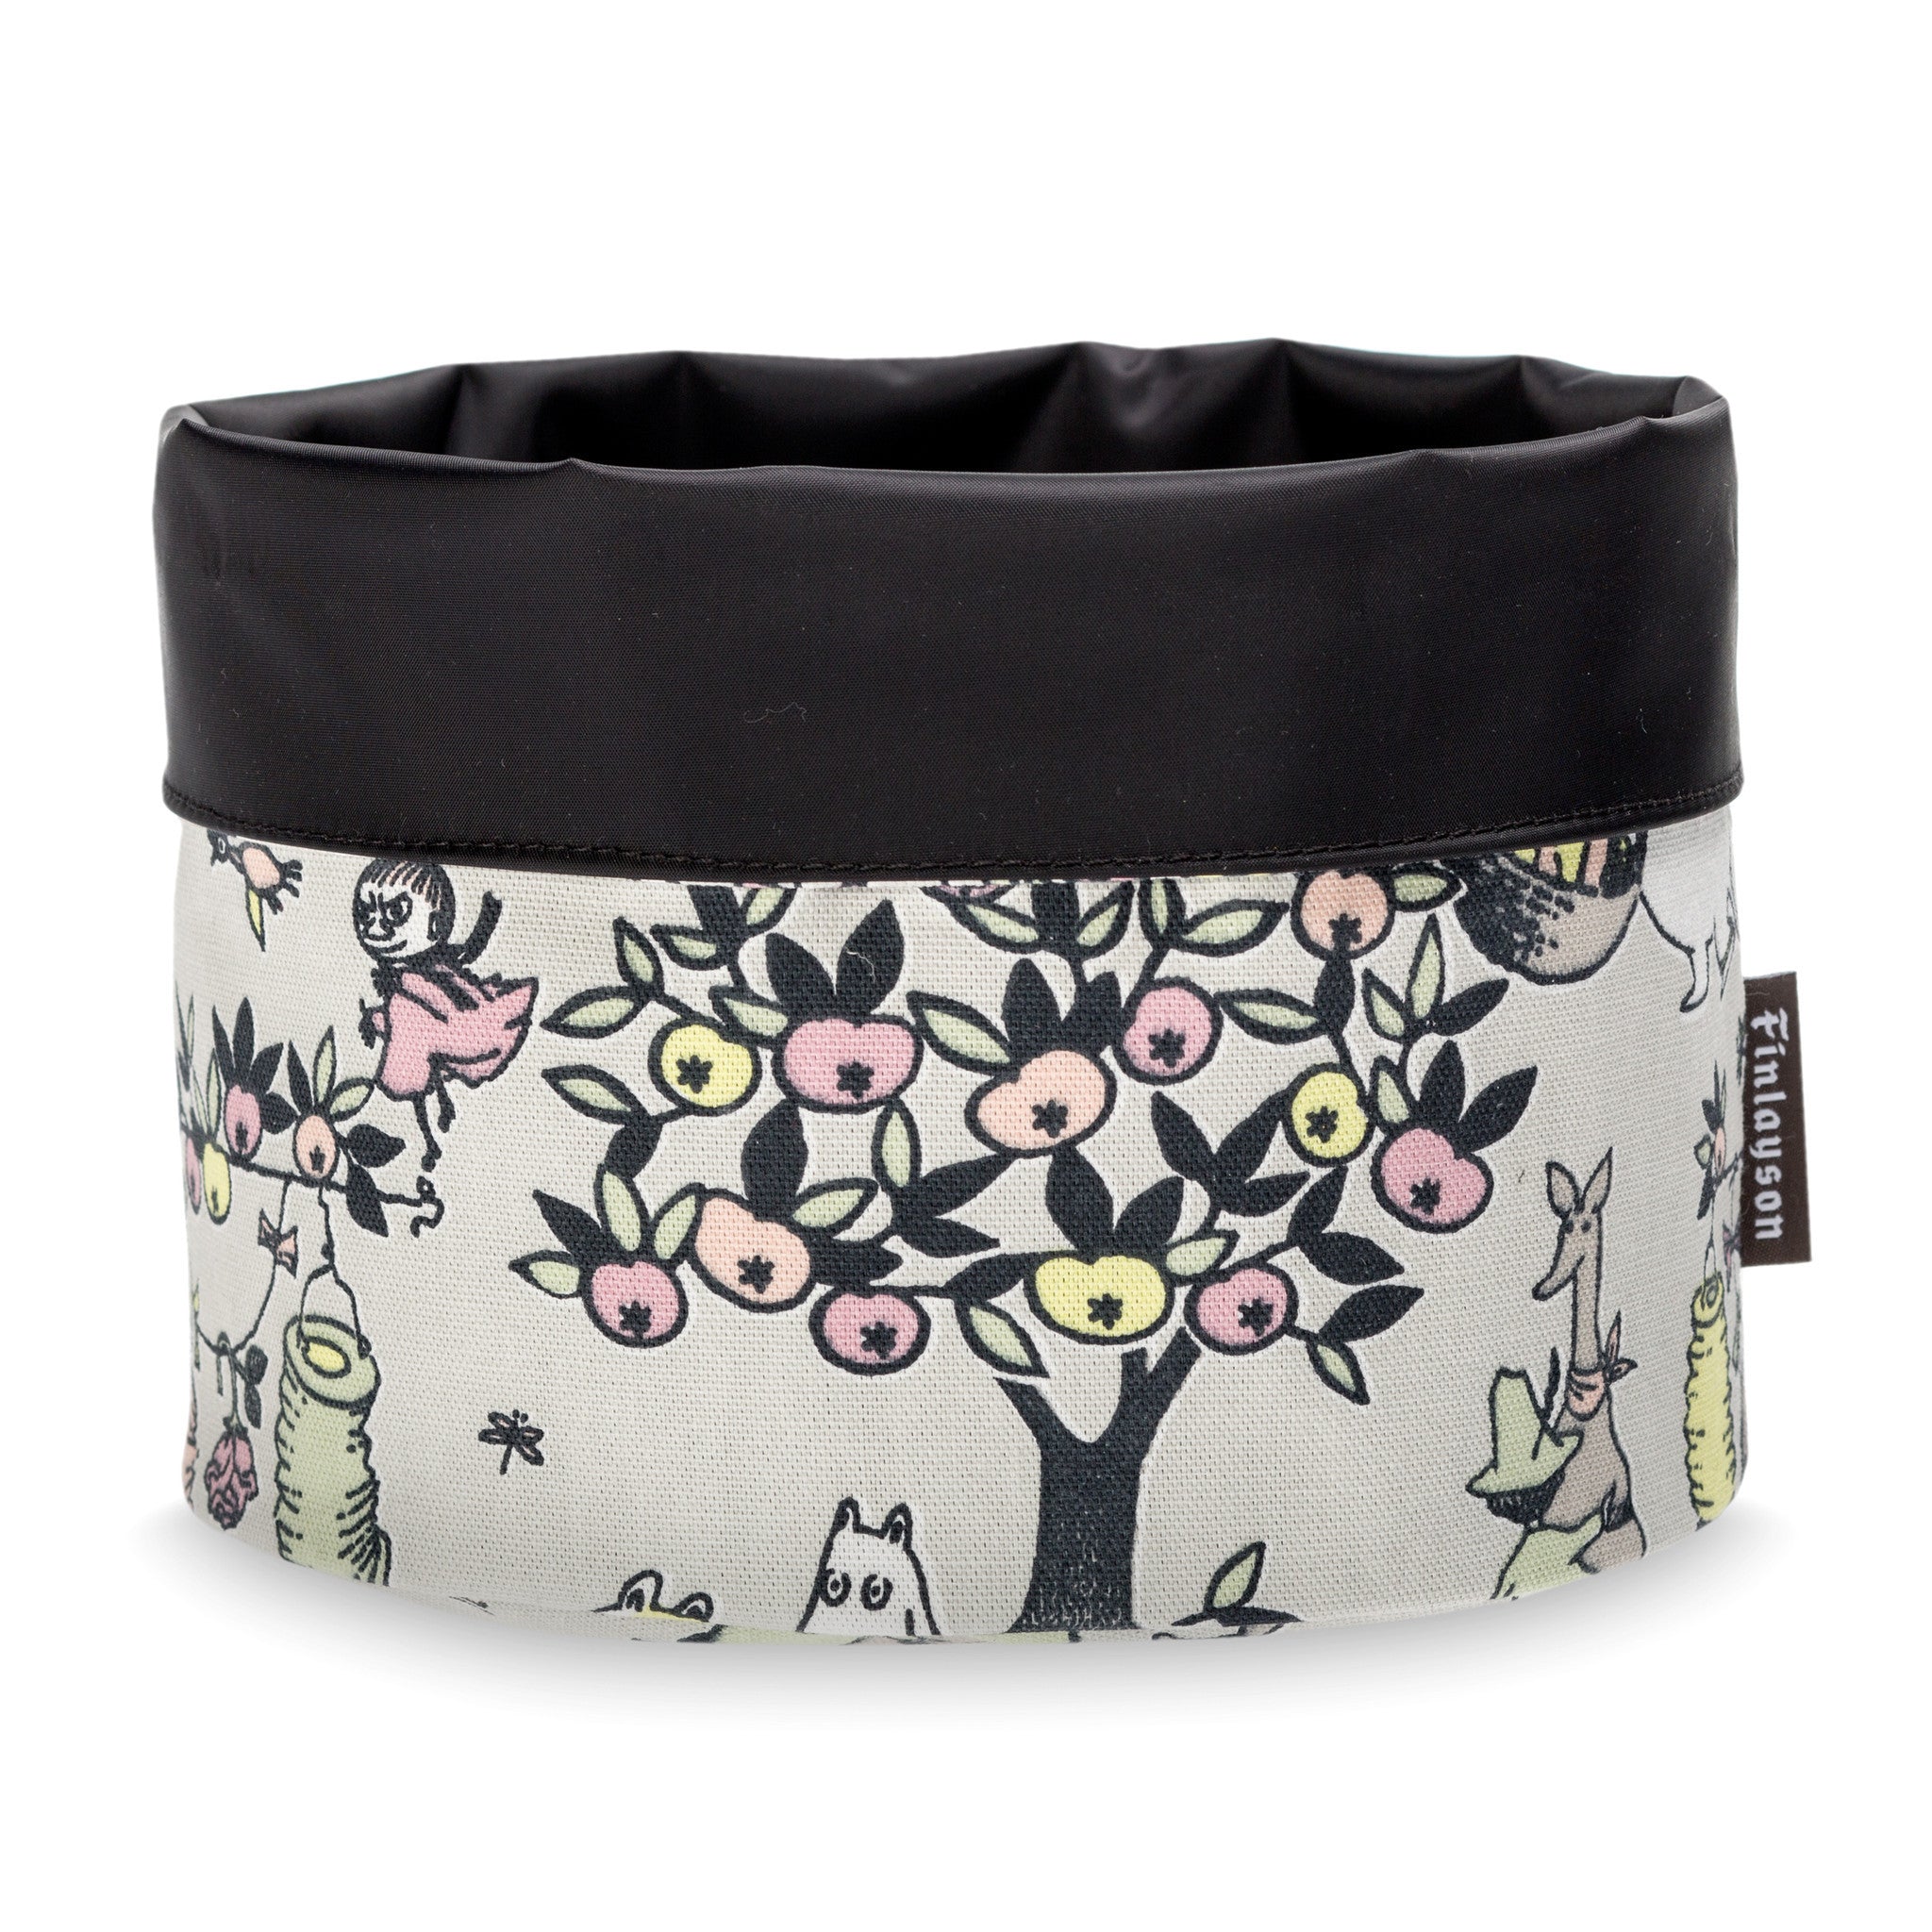 Jubilee Moomin fabric basket by Finlayson • App Proxy Testing